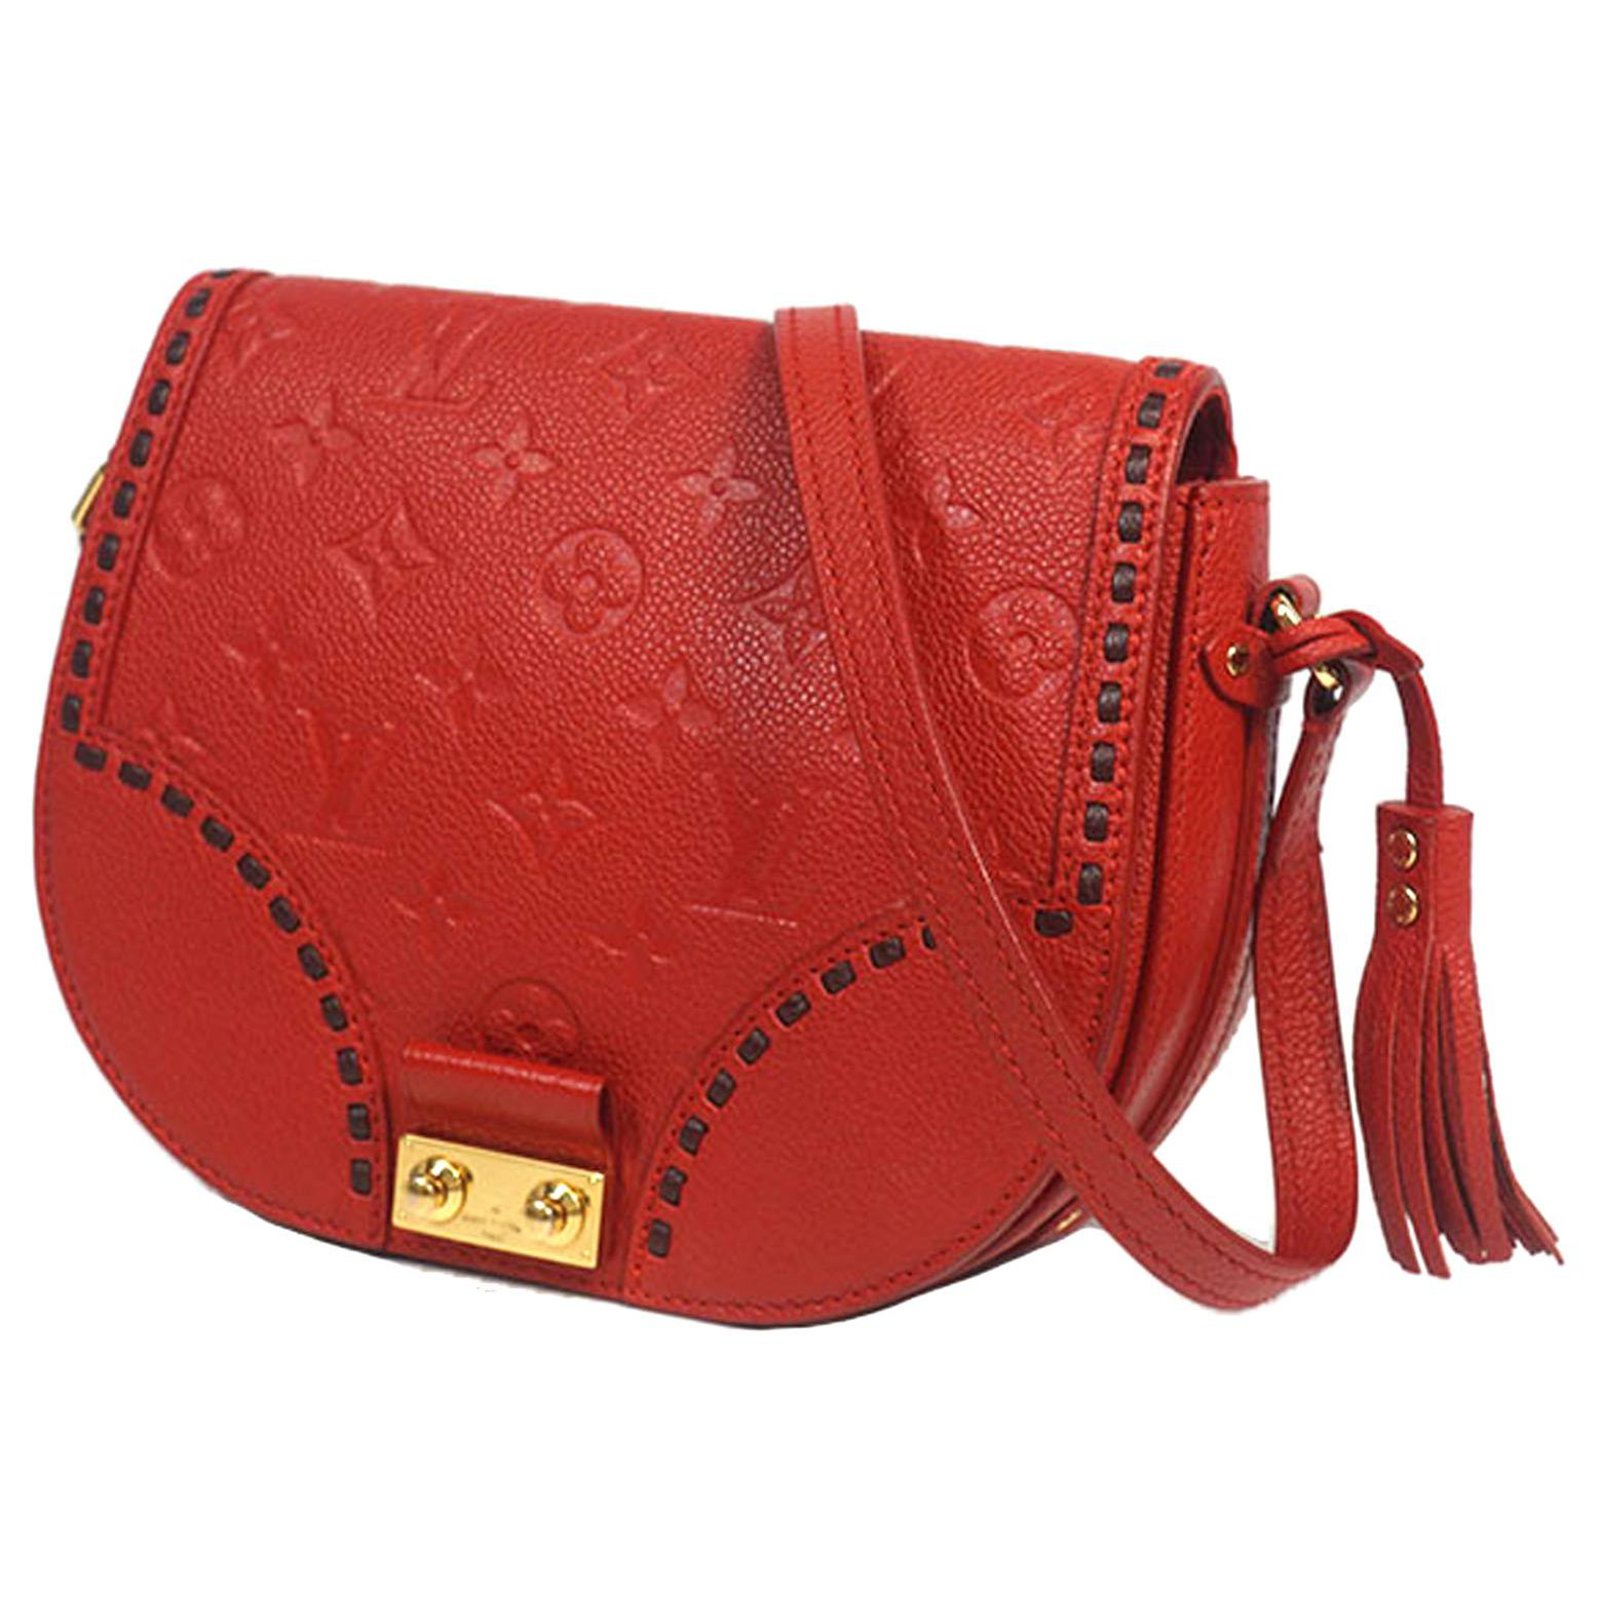 Vintage 1990s Louis VUITTON Red Leather Handbag  Etsy Australia